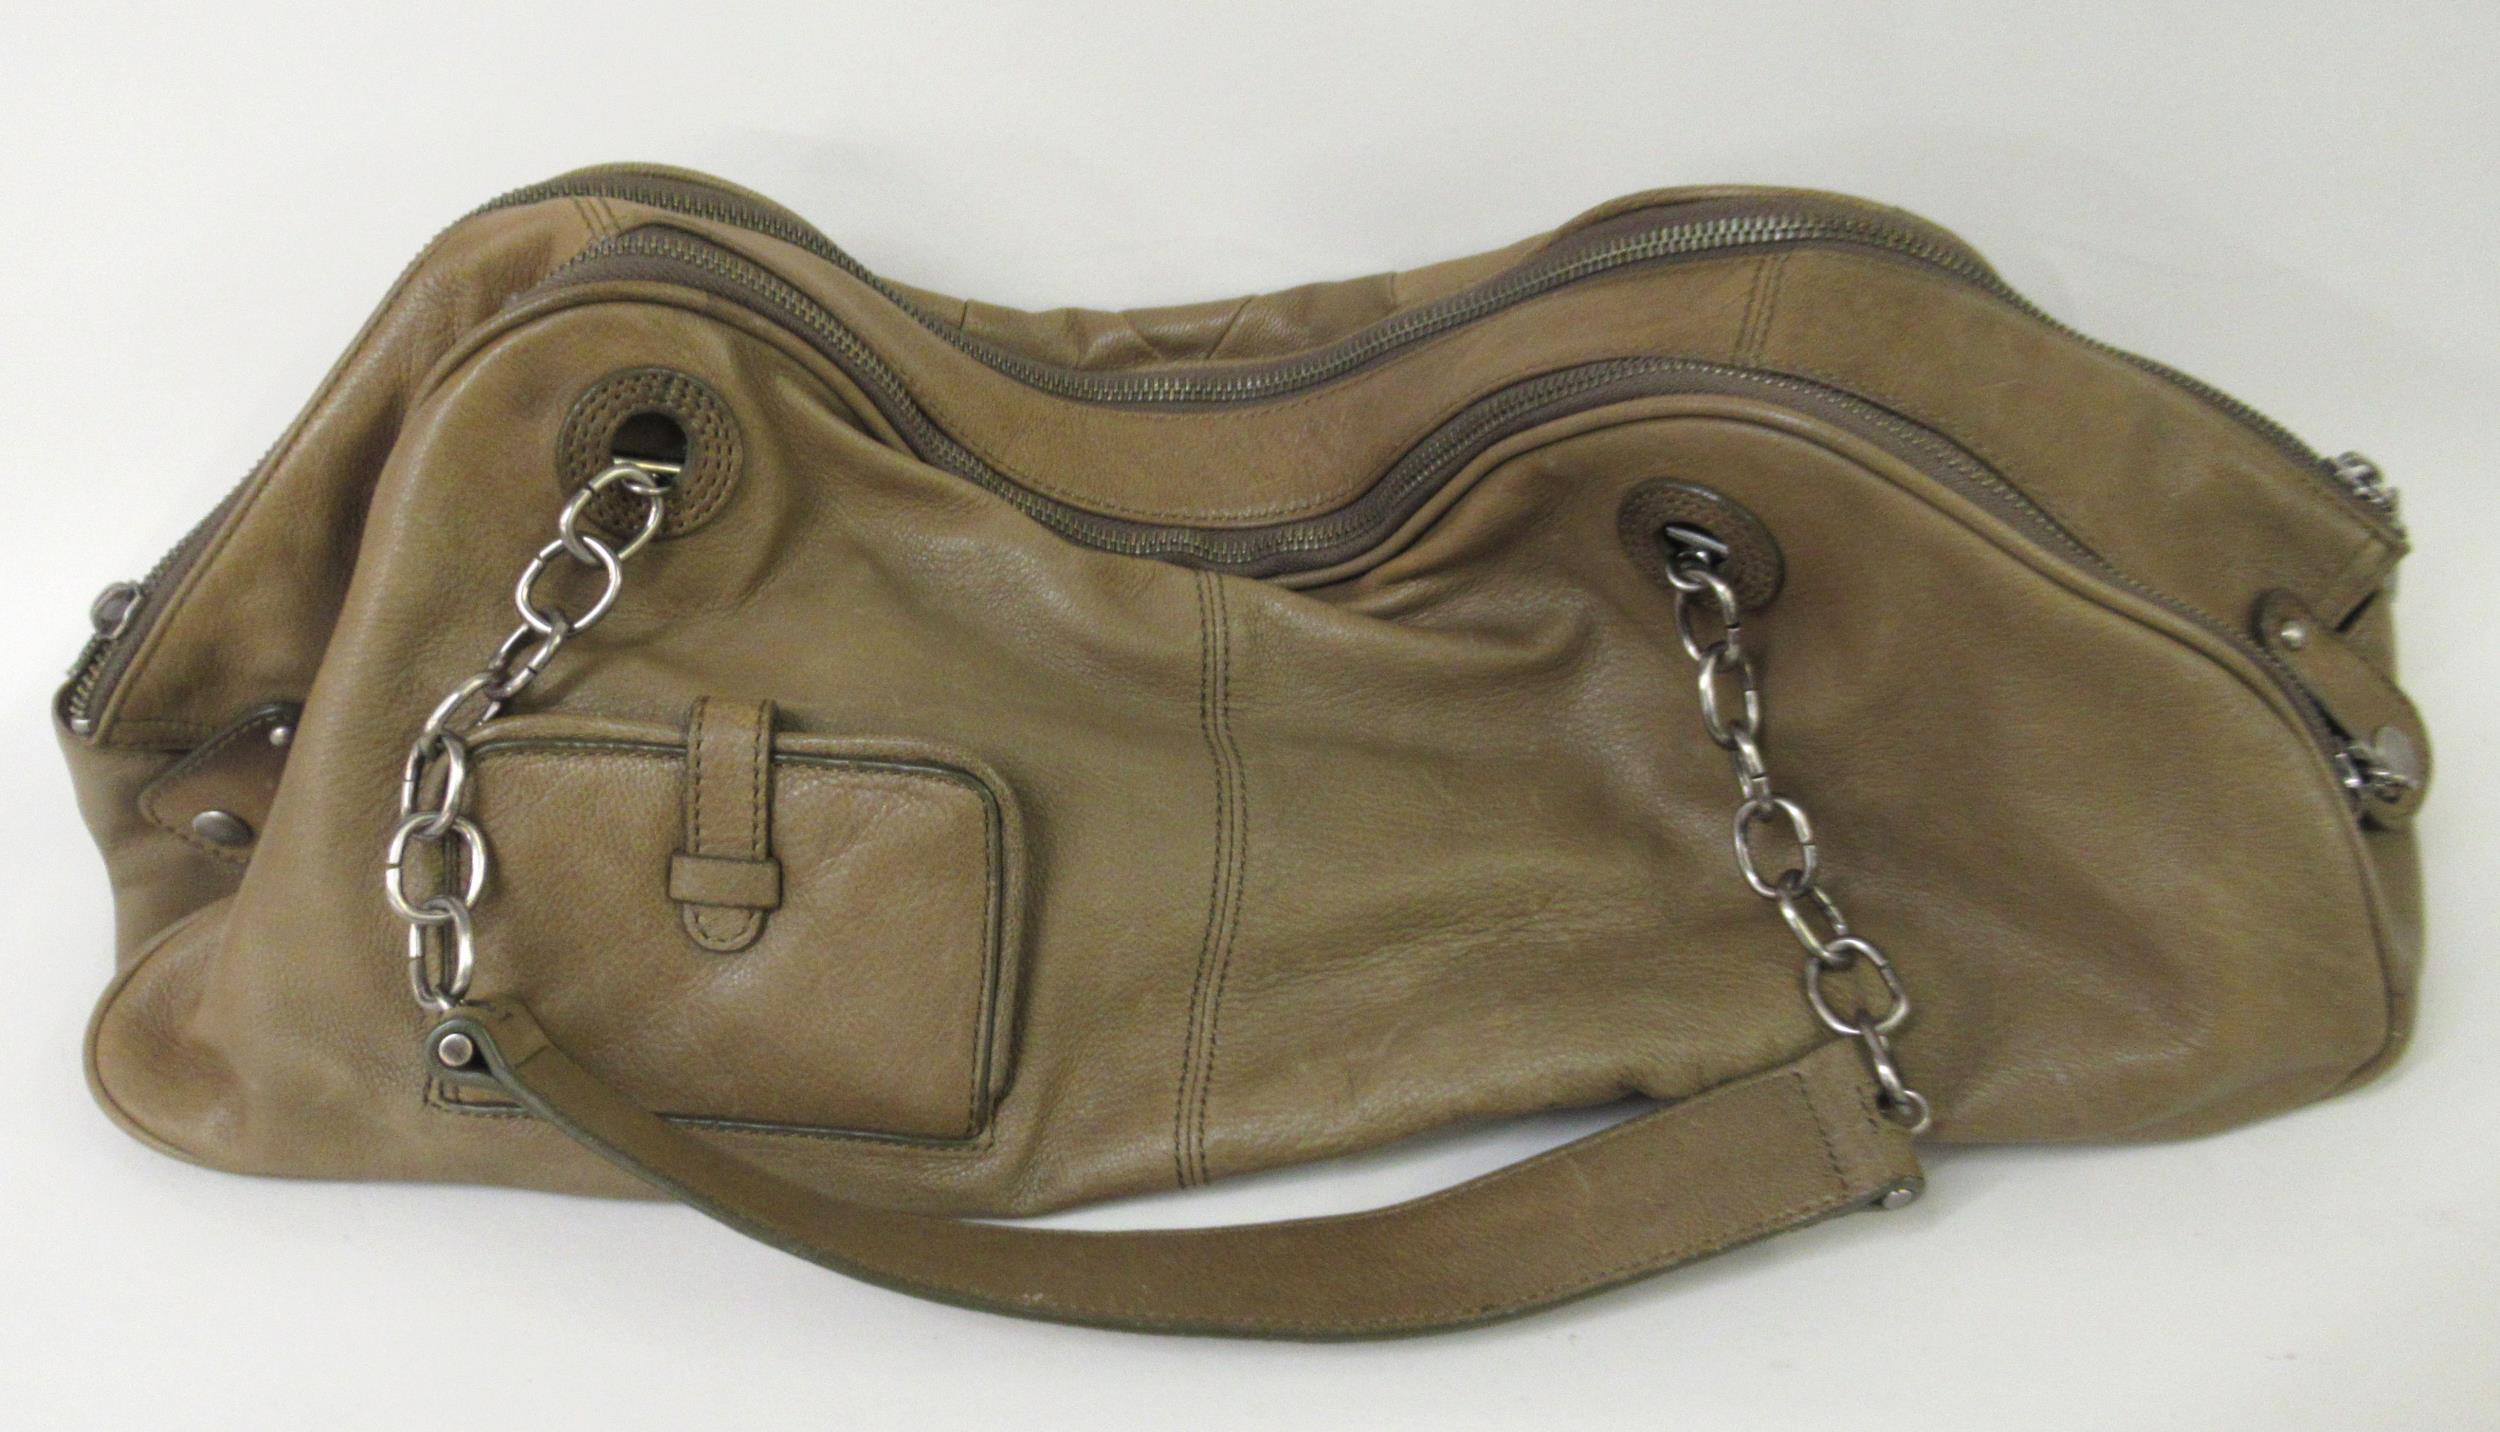 BCBG Max Azria, large green leather shoulder bag One zip tag missing - Image 3 of 9